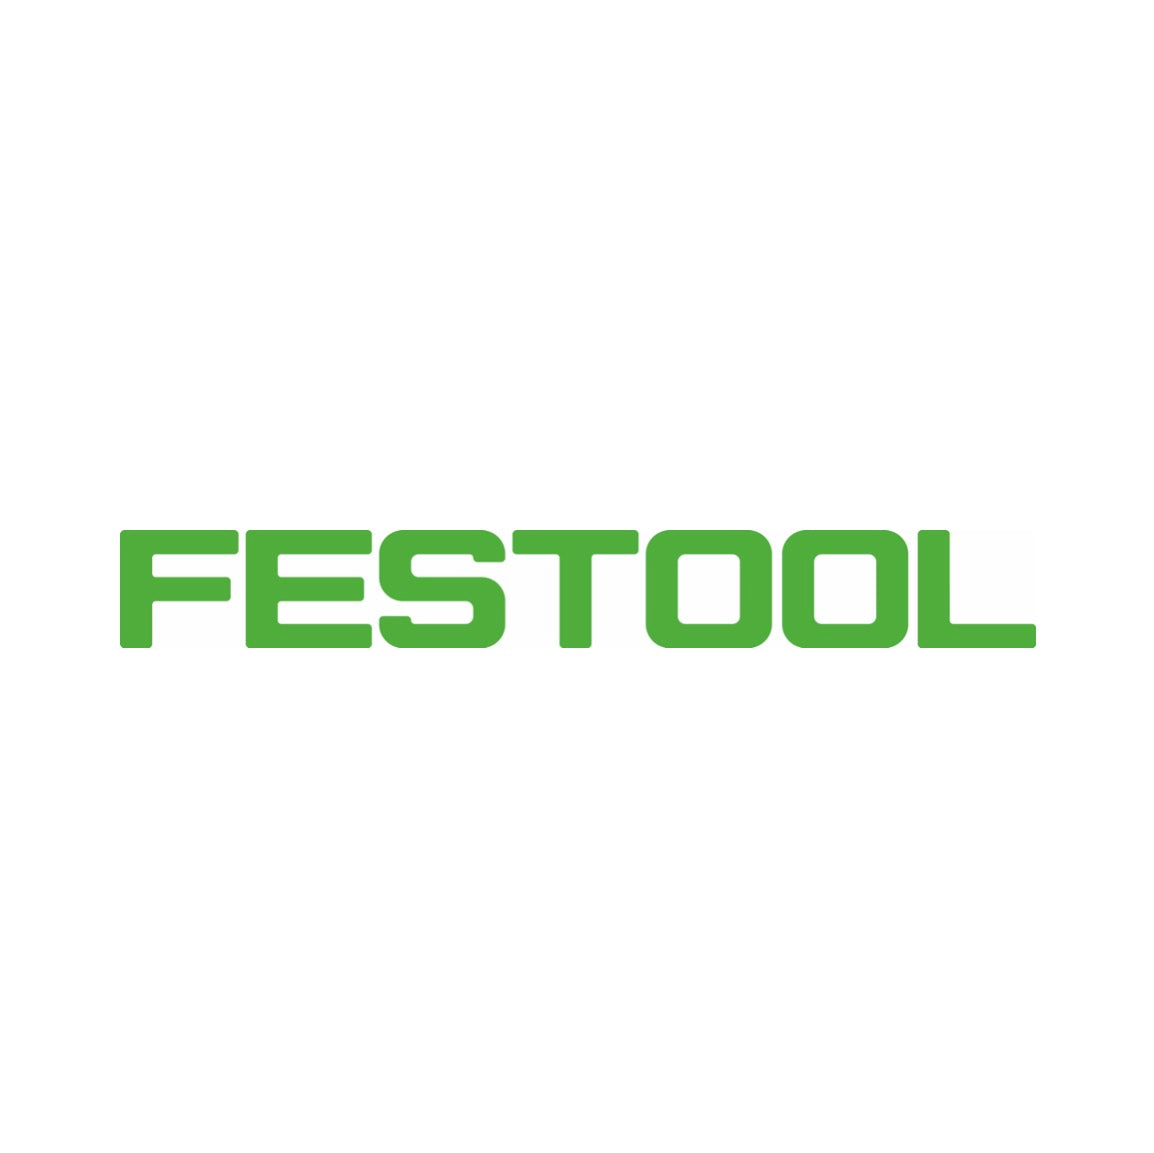 Festool SELFCLEAN Filtersack SC FIS-CT 36/25 Set ( 5x 496186 ) für CT 36 Absaugmobil - 25 Stück - Toolbrothers